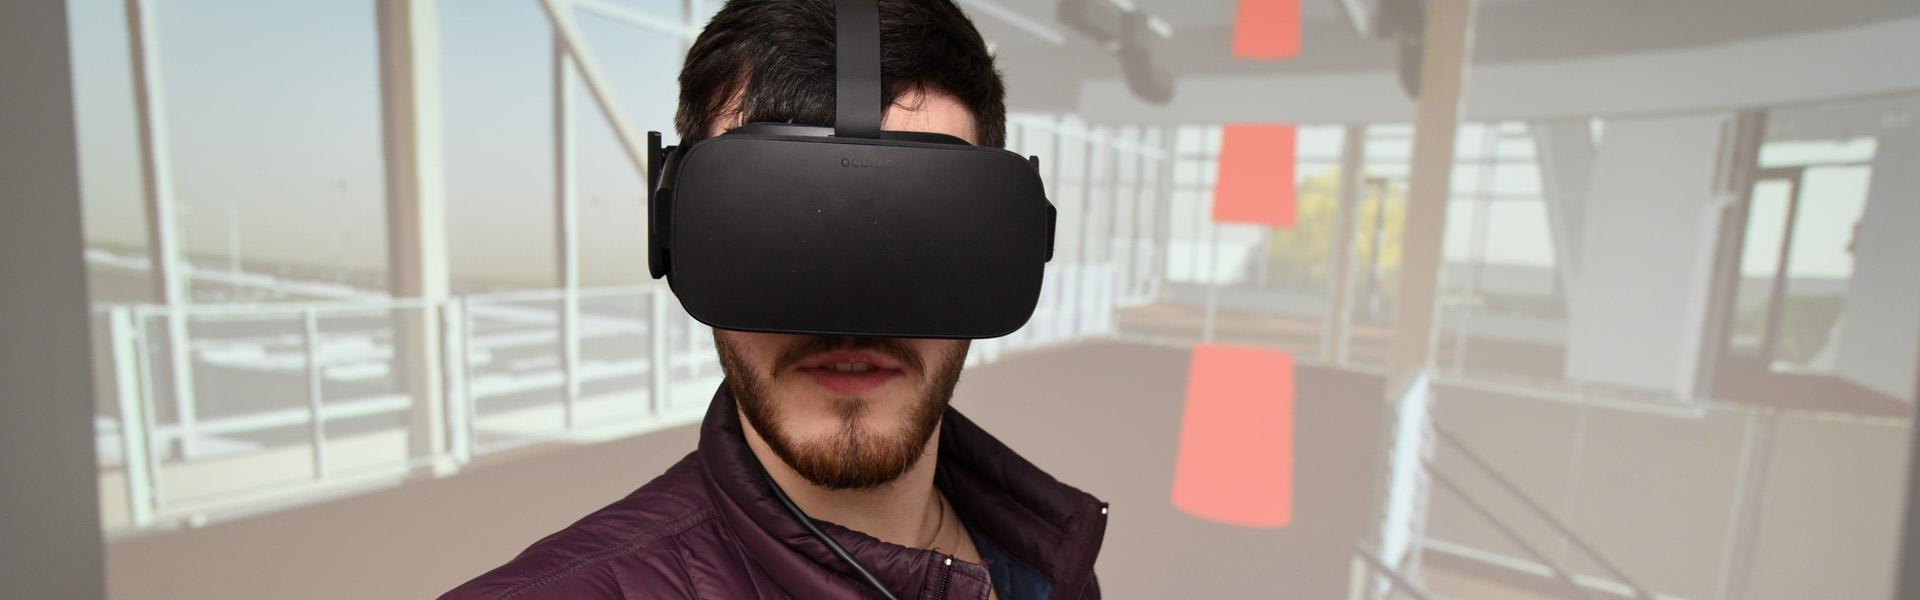 Student wearing virtual reality headset